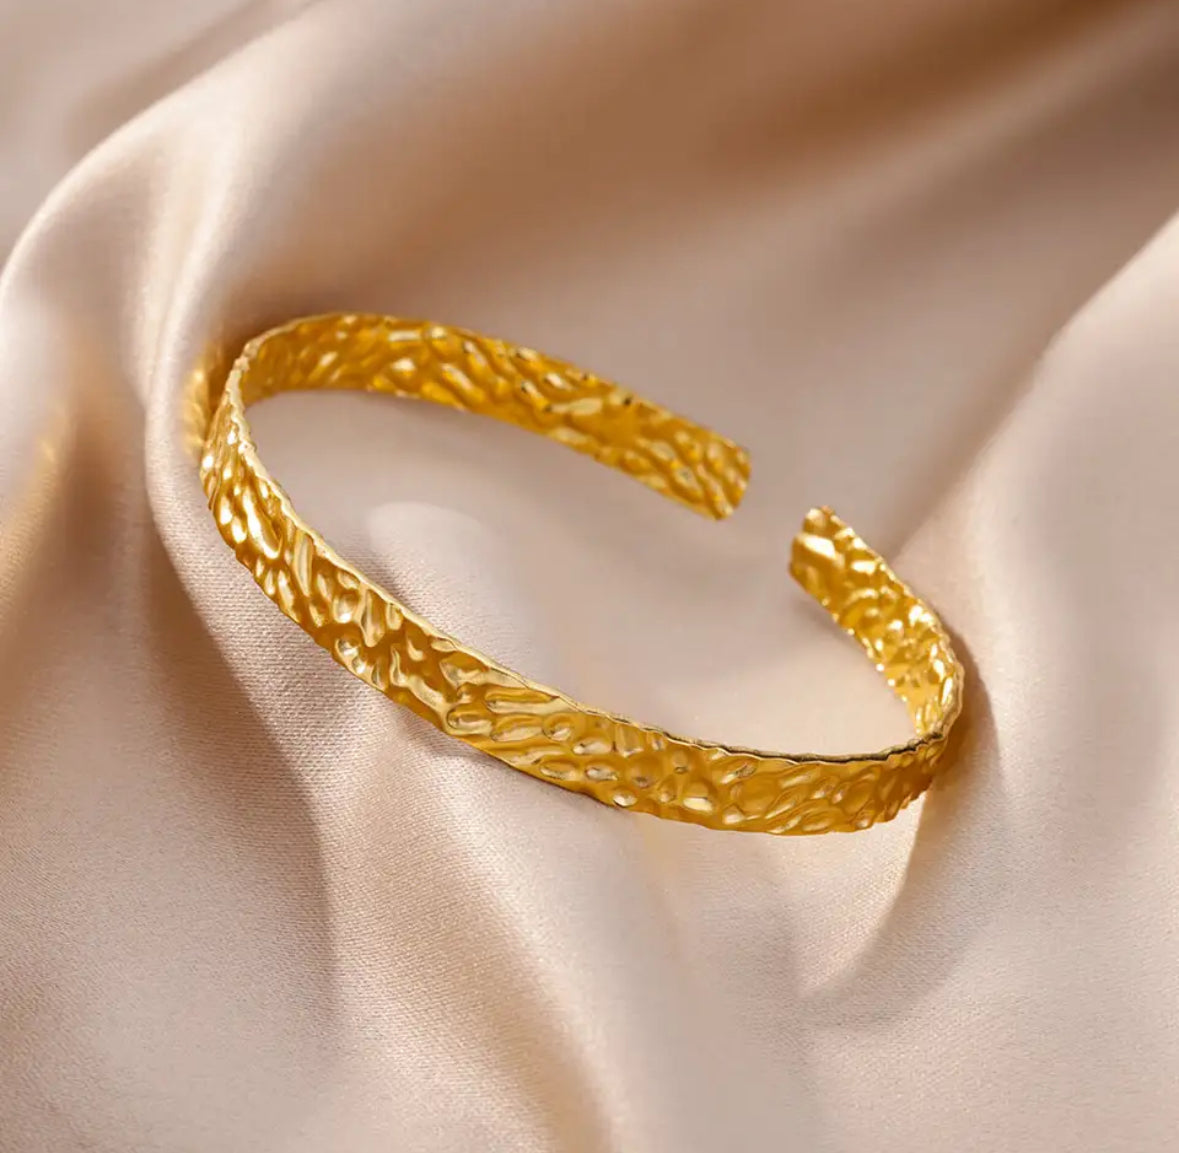 Adjustable Bracelets, Bangles made of 316L Stainless Steel in Gold